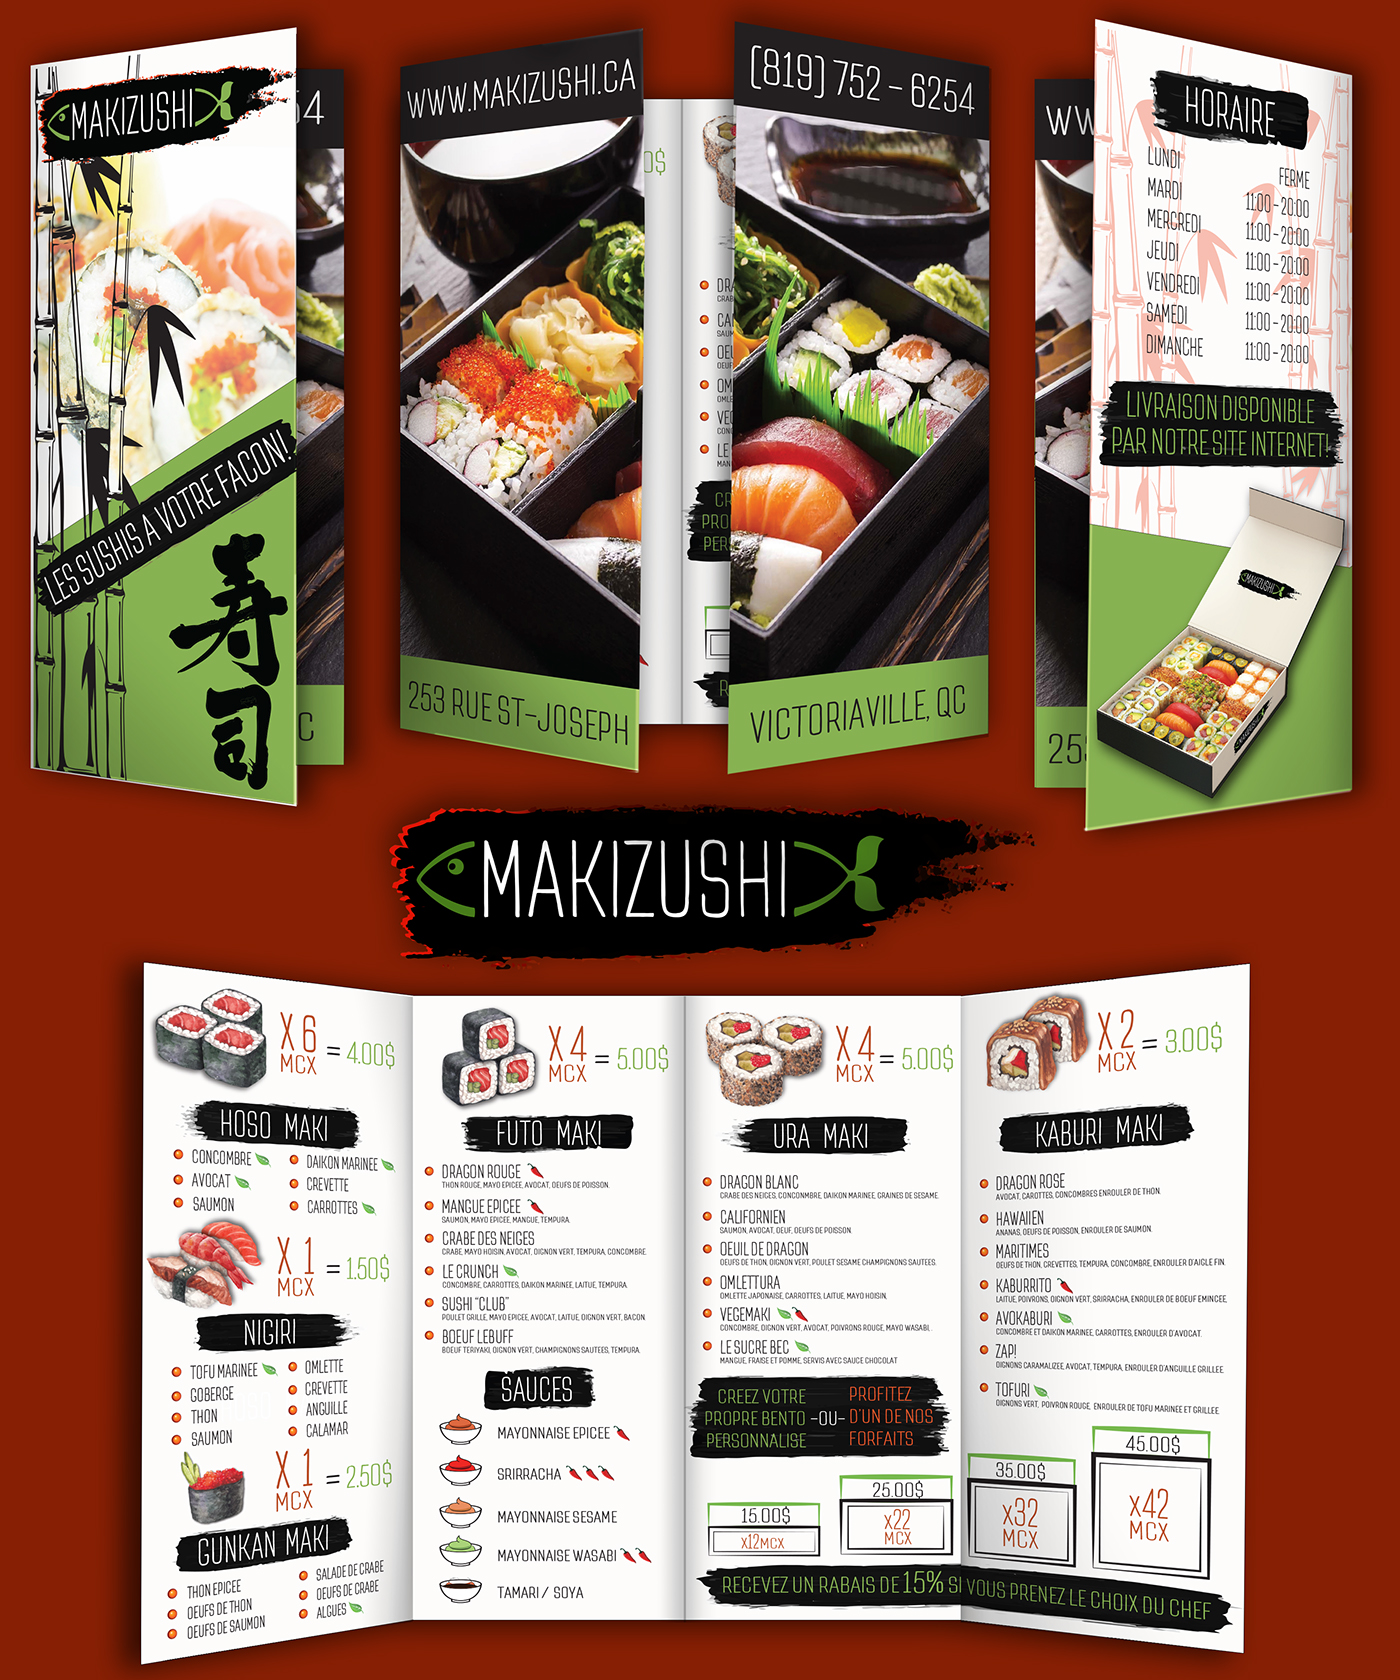 Sushi bento pamphlet menu delivery takeout maki restaurant shop japanese